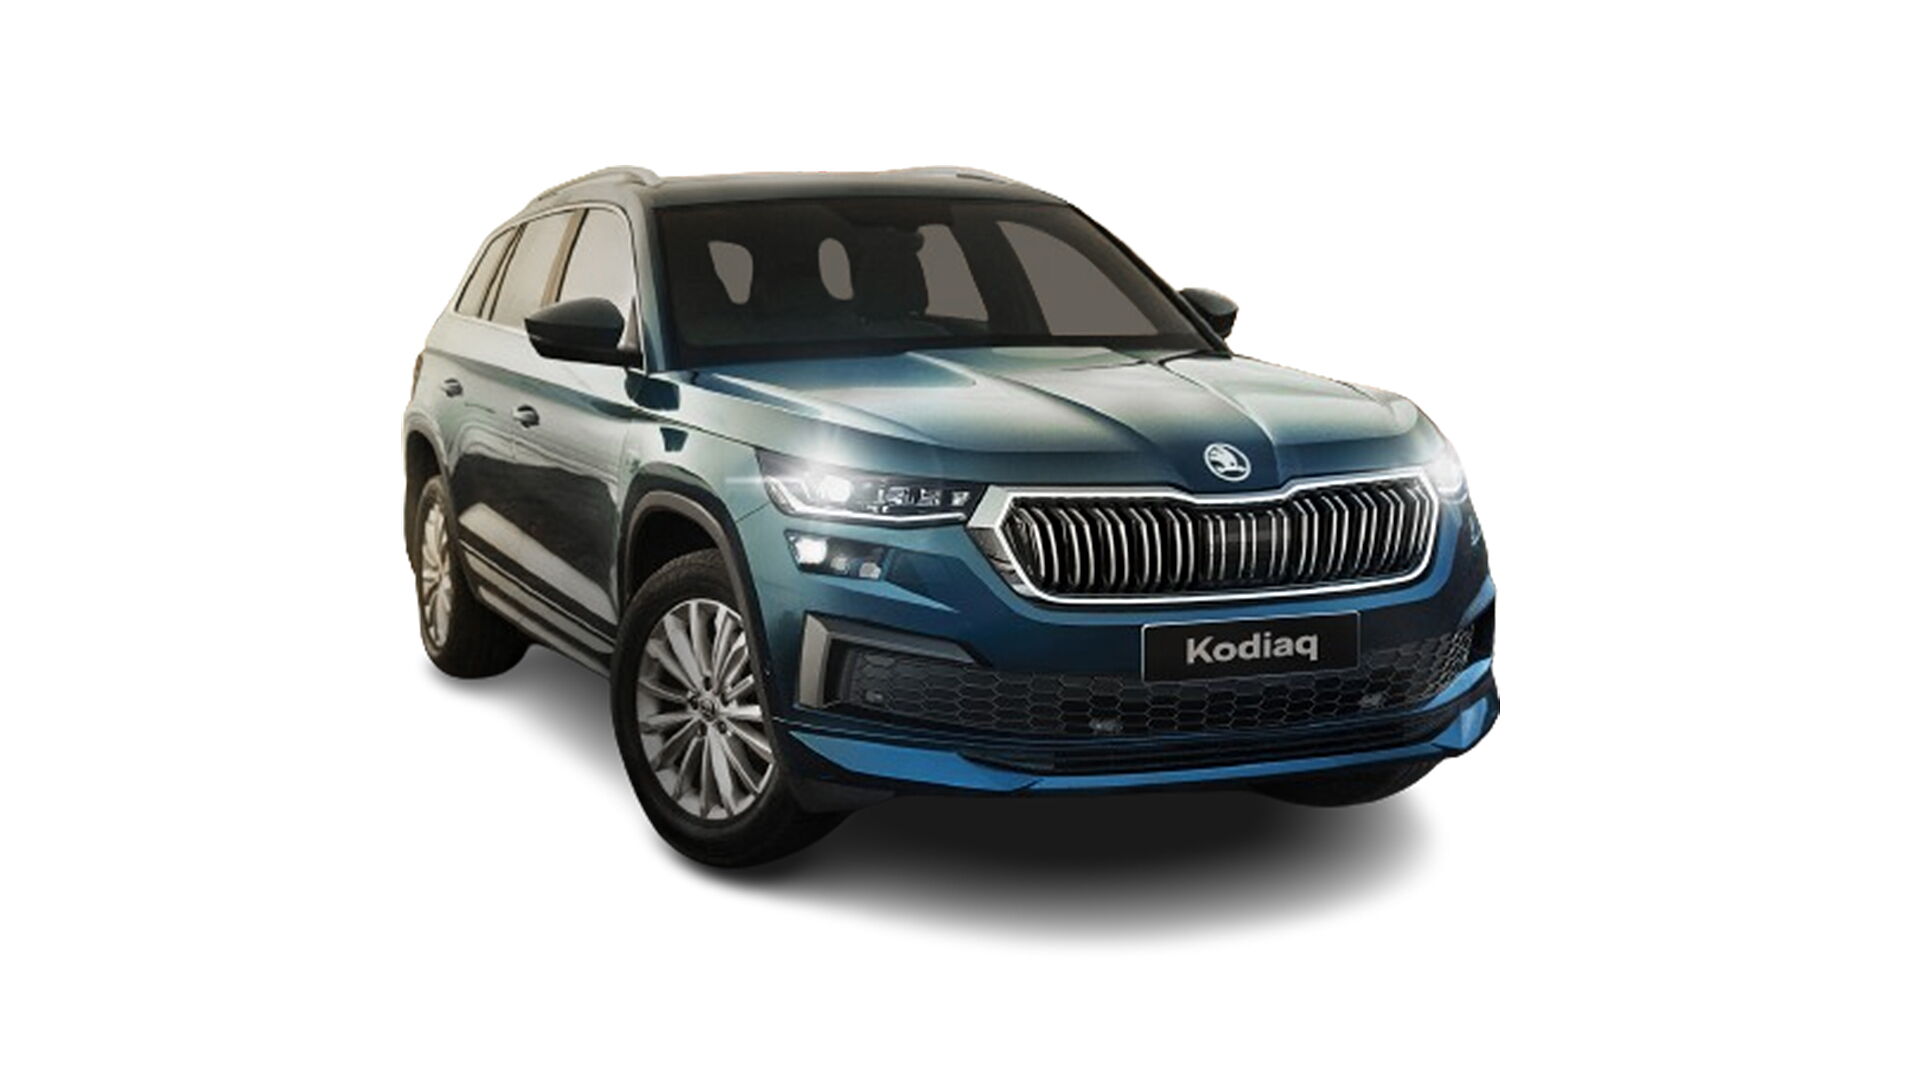 Buy Škoda Kodiaq used or new